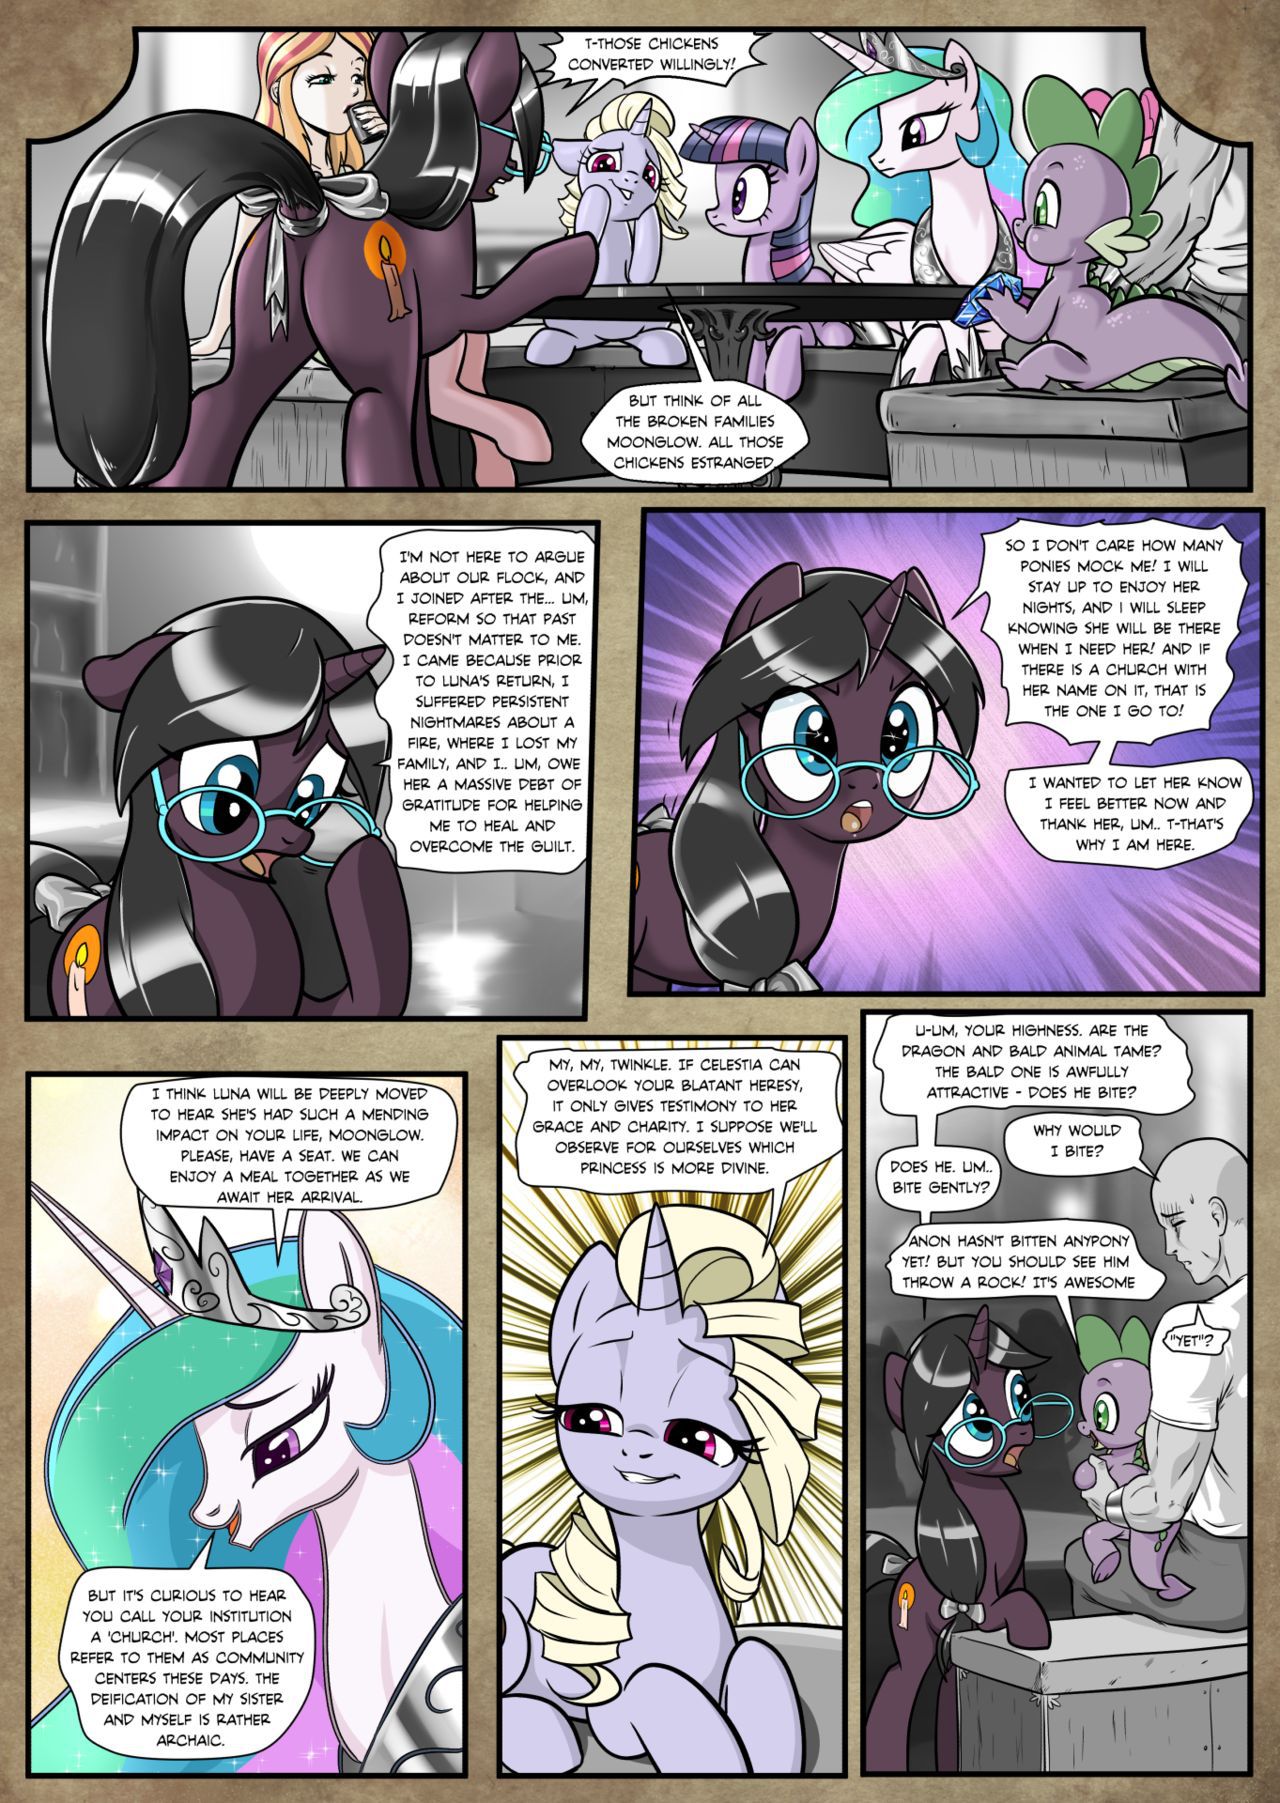 [Pencils] Anon's Pie Adventures (My Little Pony: Friendship is Magic) [In-Progress] 179